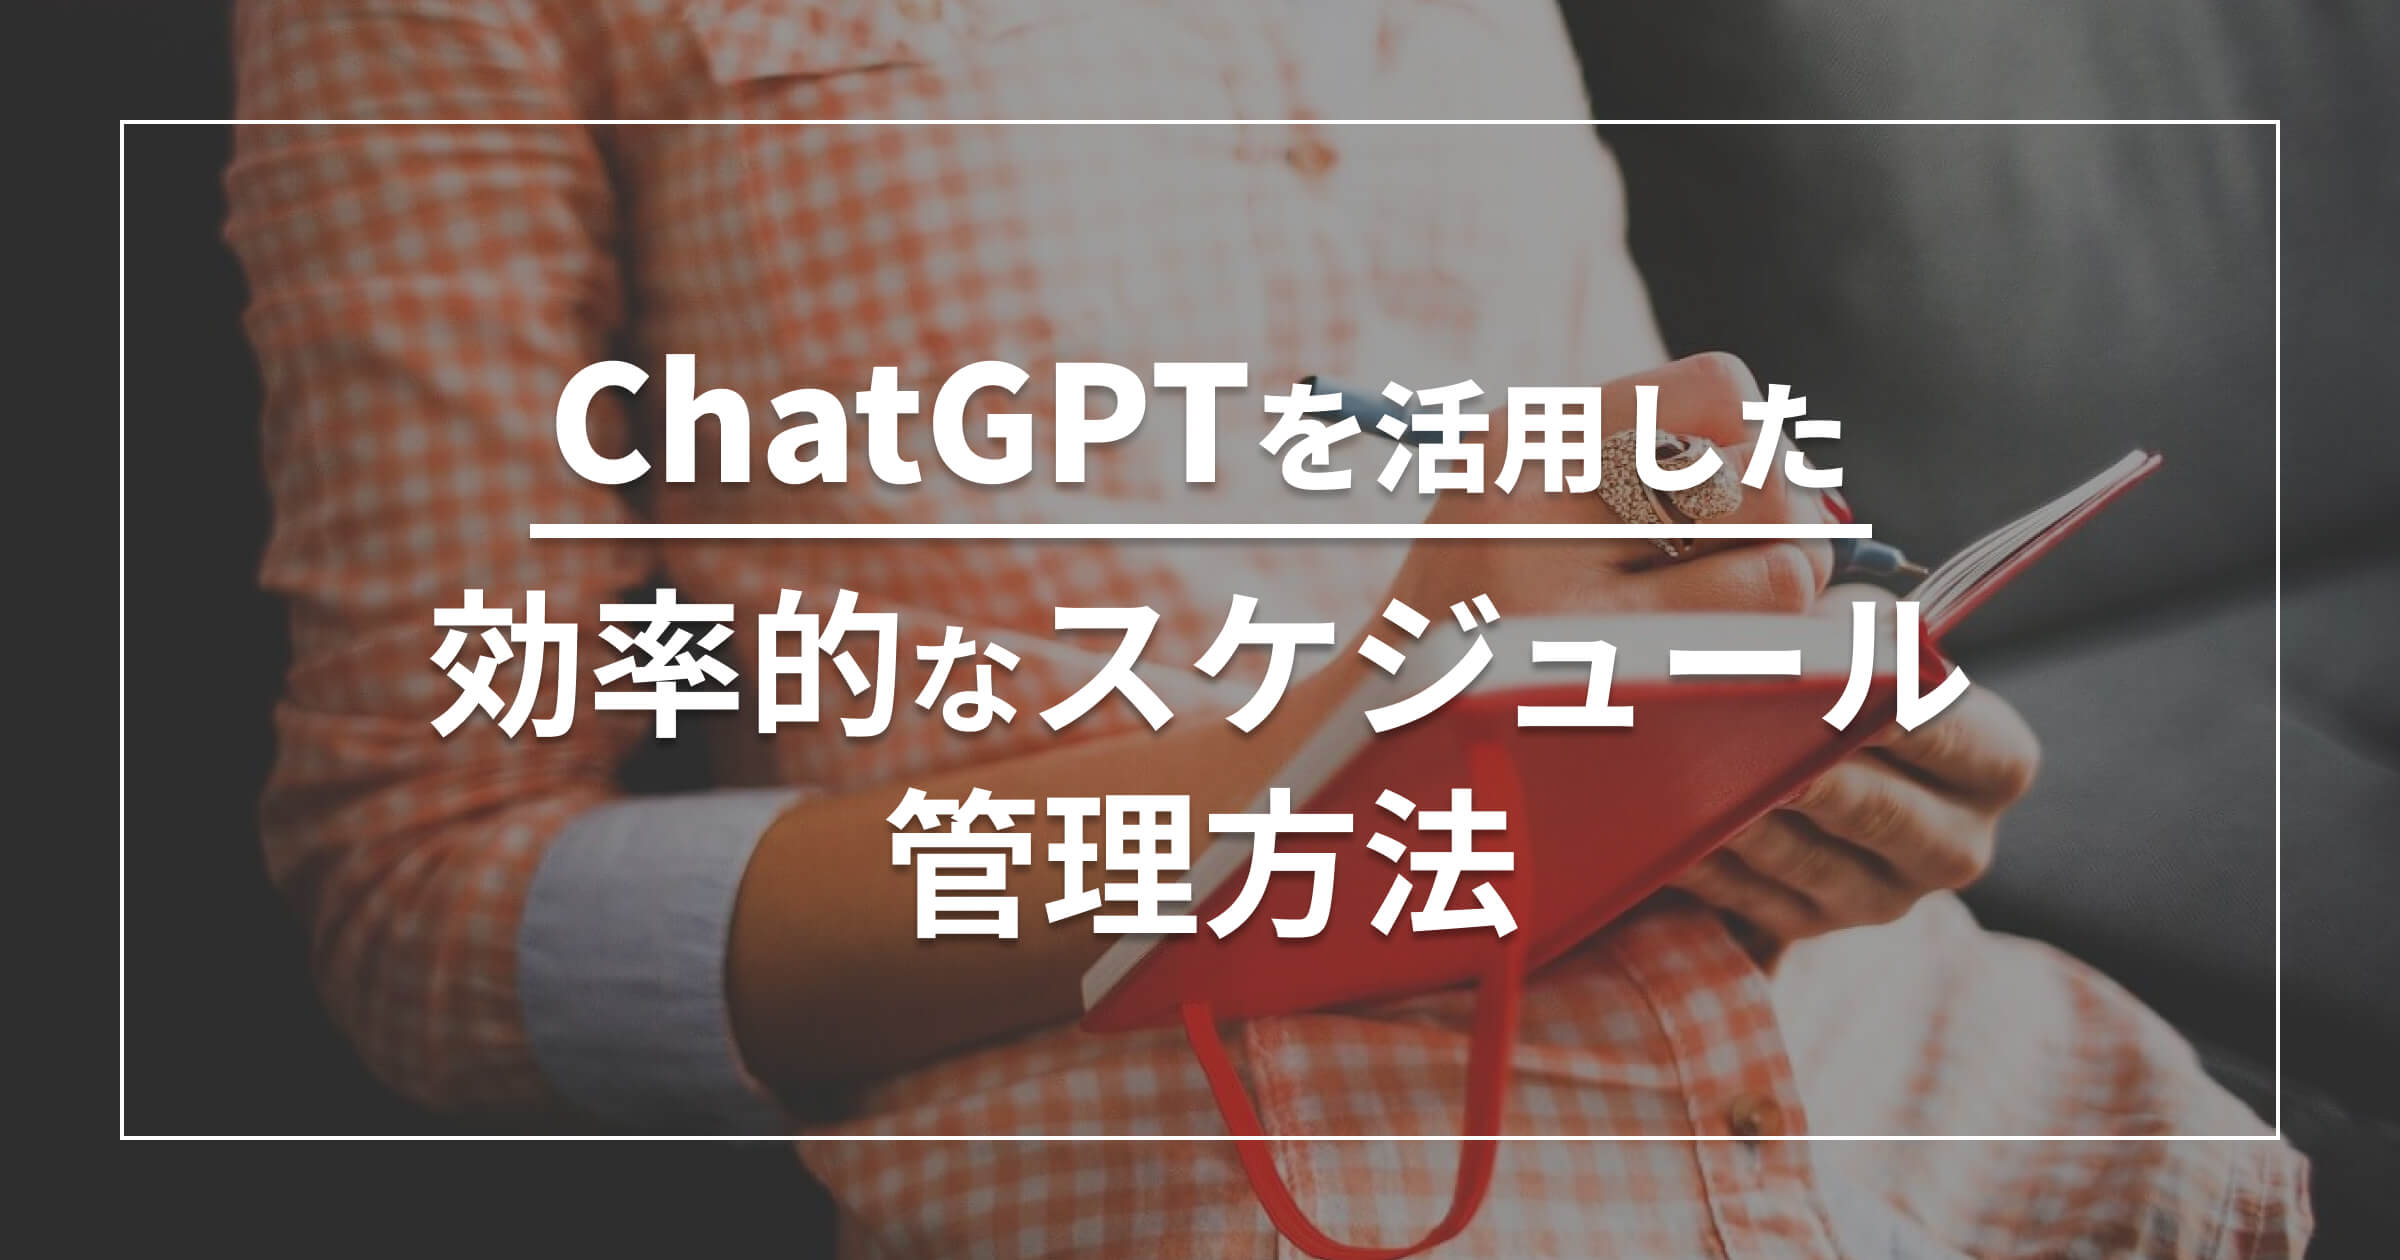 ChatGPTを活用した効率的なスケジュール 管理方法